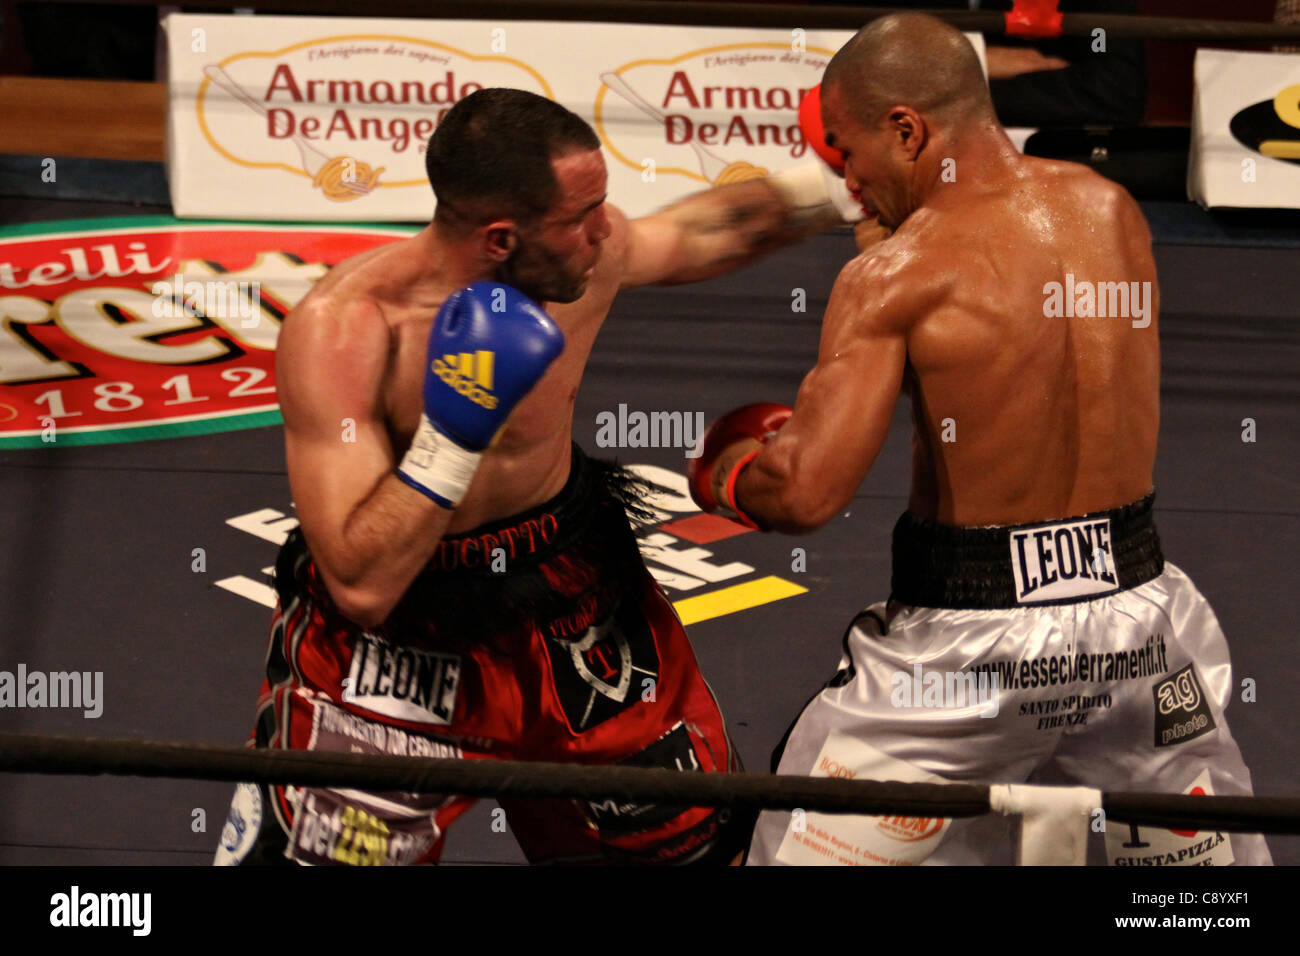 FLORENCE (IT), 04/Nov/2011: Bundu VS Petrucci, Welter Weight Boxing European Title @ Mandela Forum - Stock Photo